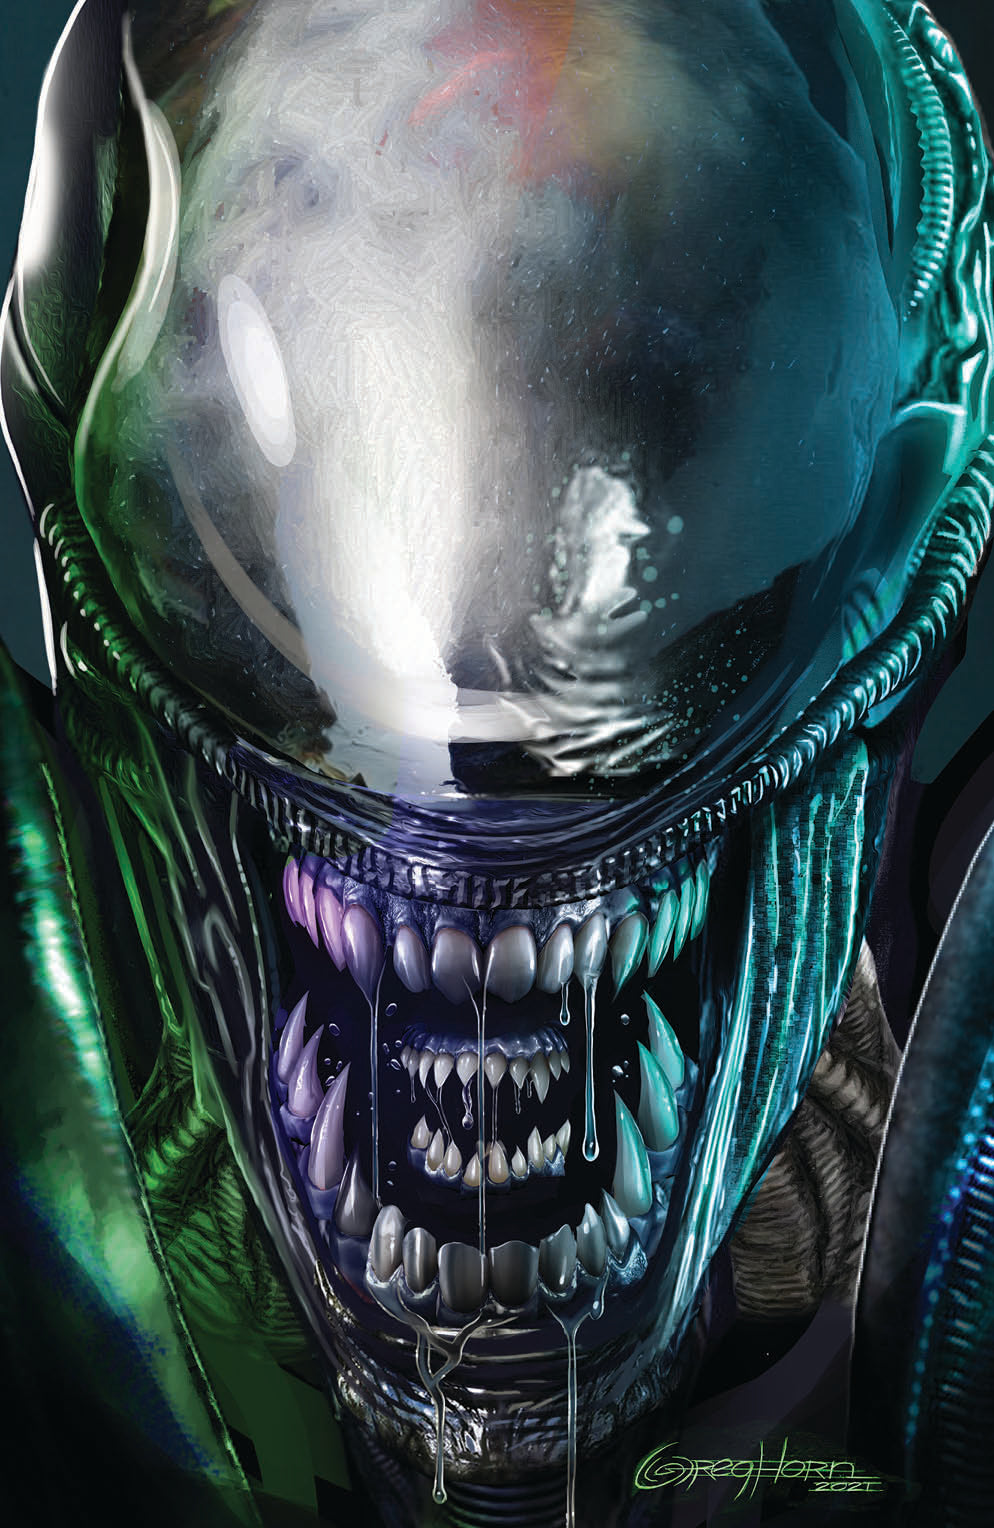 Alien Close-Up - High quality 11 x 17 digital print